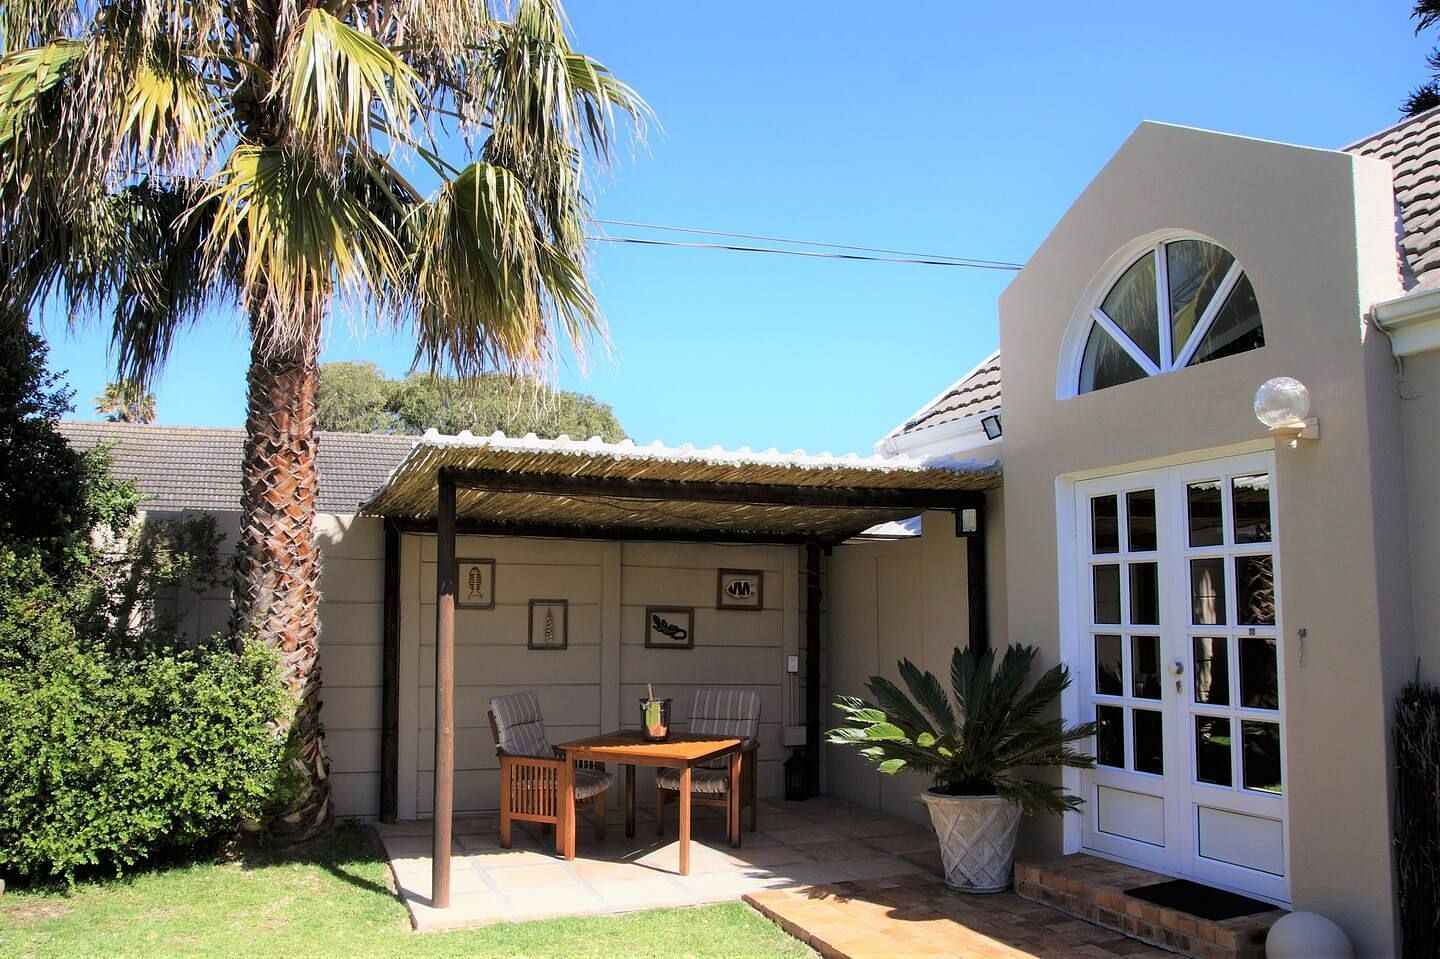 JWguest Residential Home at Cape Town, Western Cape | Wonderful Studio Apartment between 2 Oceans #1 | Jwbnb no brobnb 12